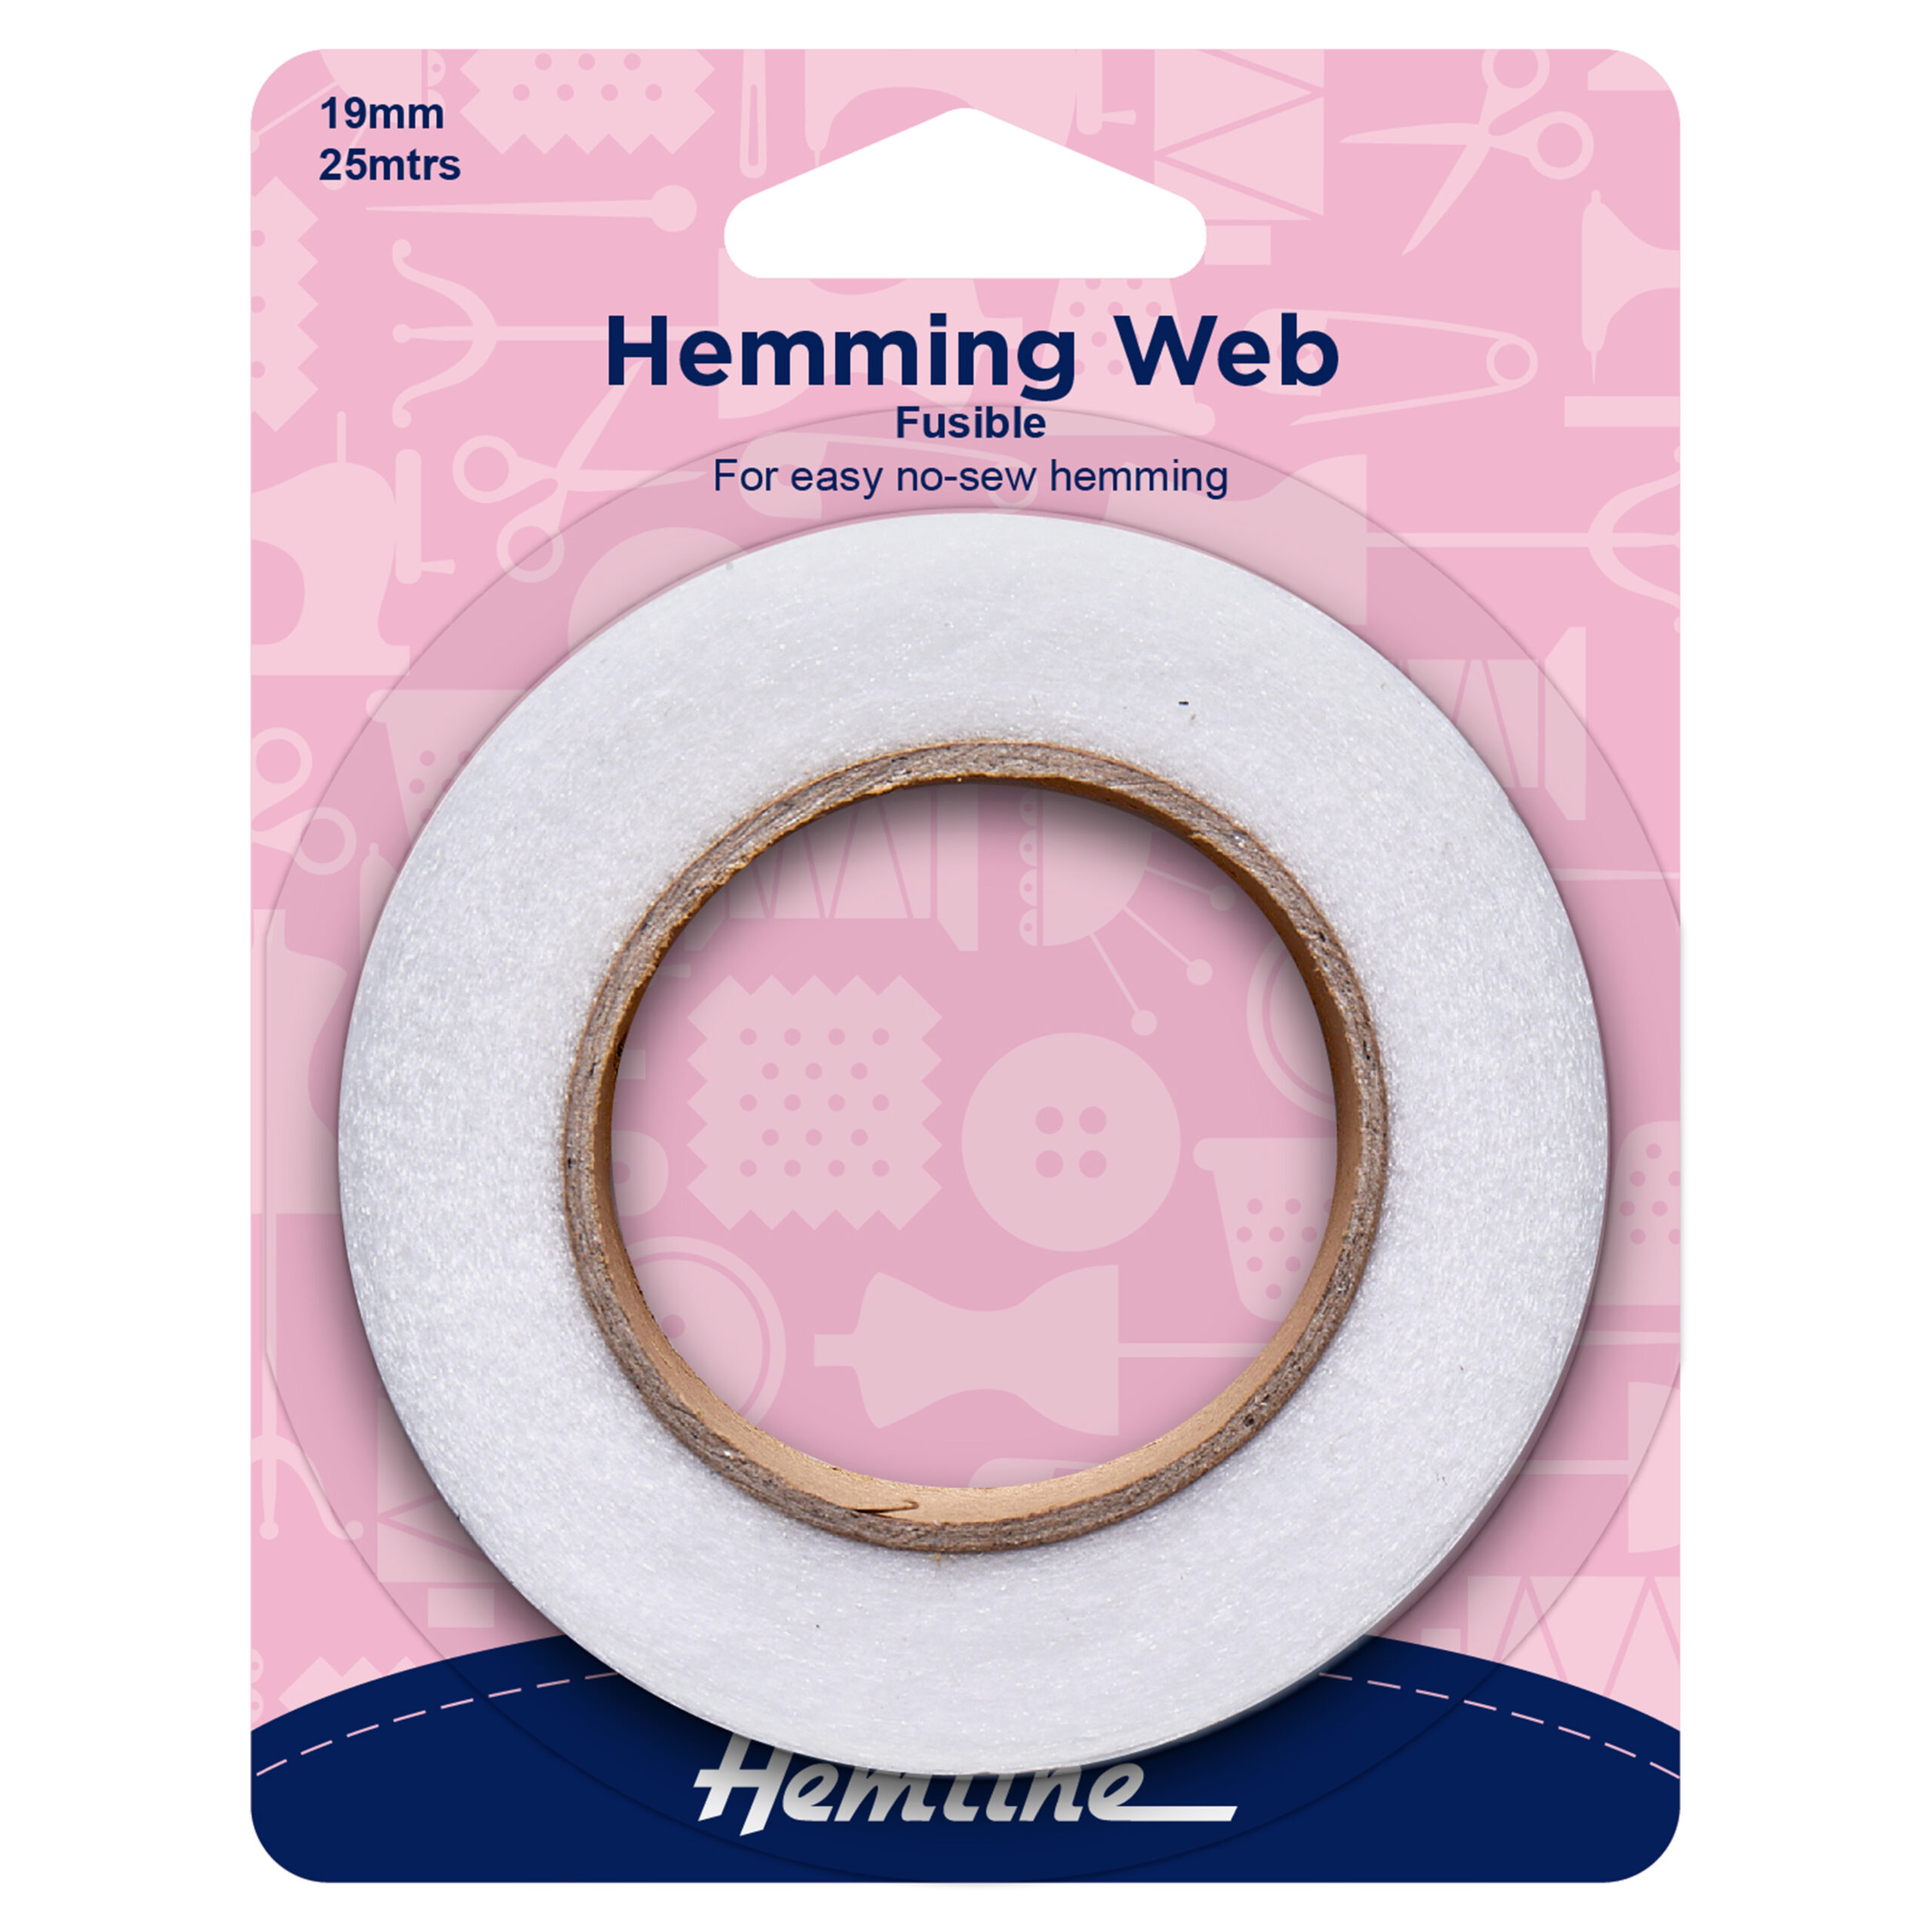 Hemming Web